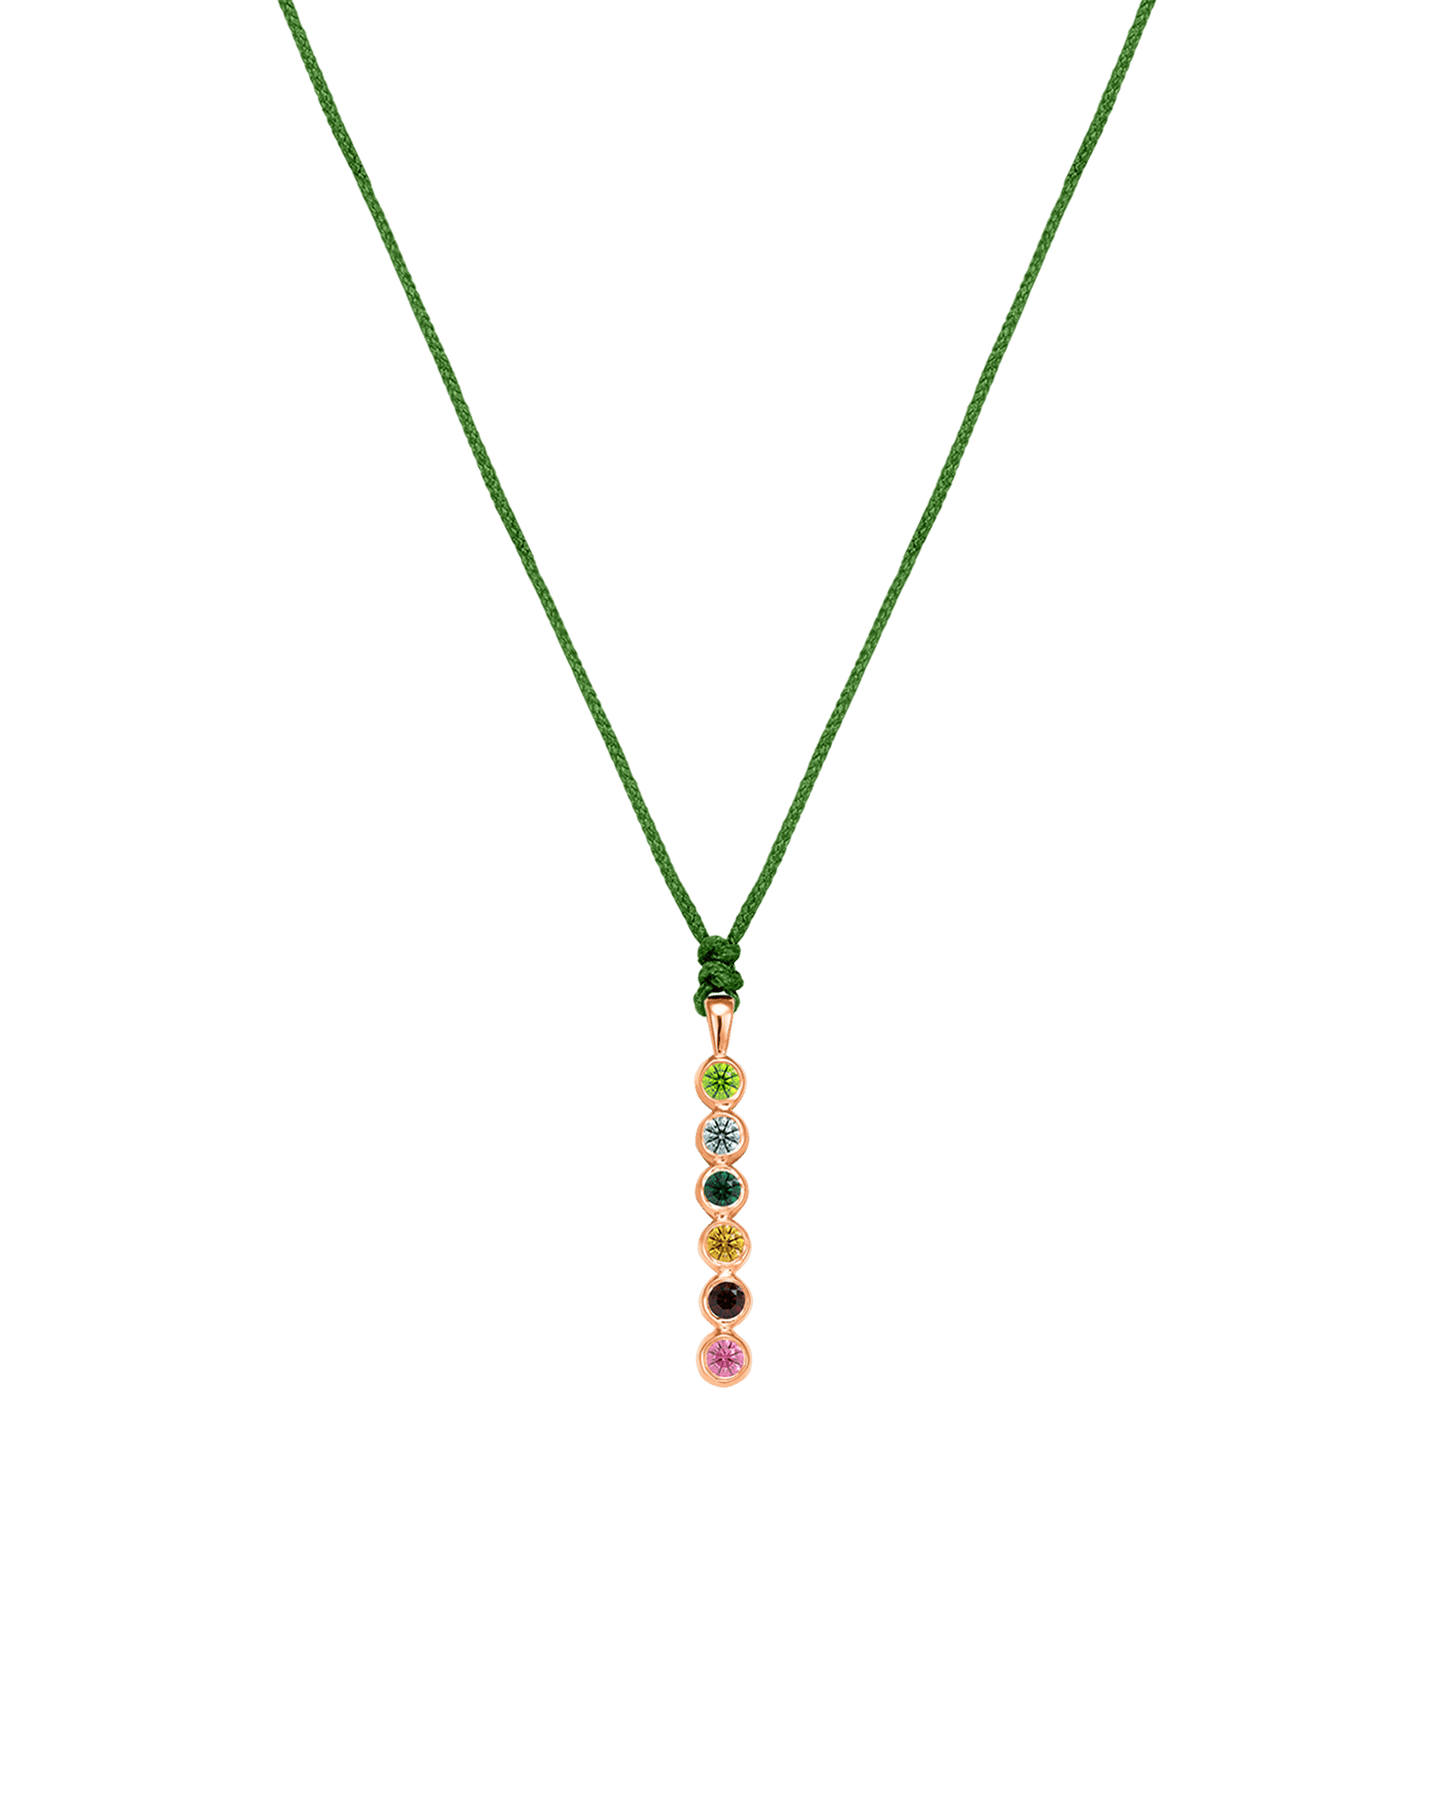 The Birthstones Bar Necklace - 14K Rose Gold Necklaces 14K Solid Gold Mint 2 